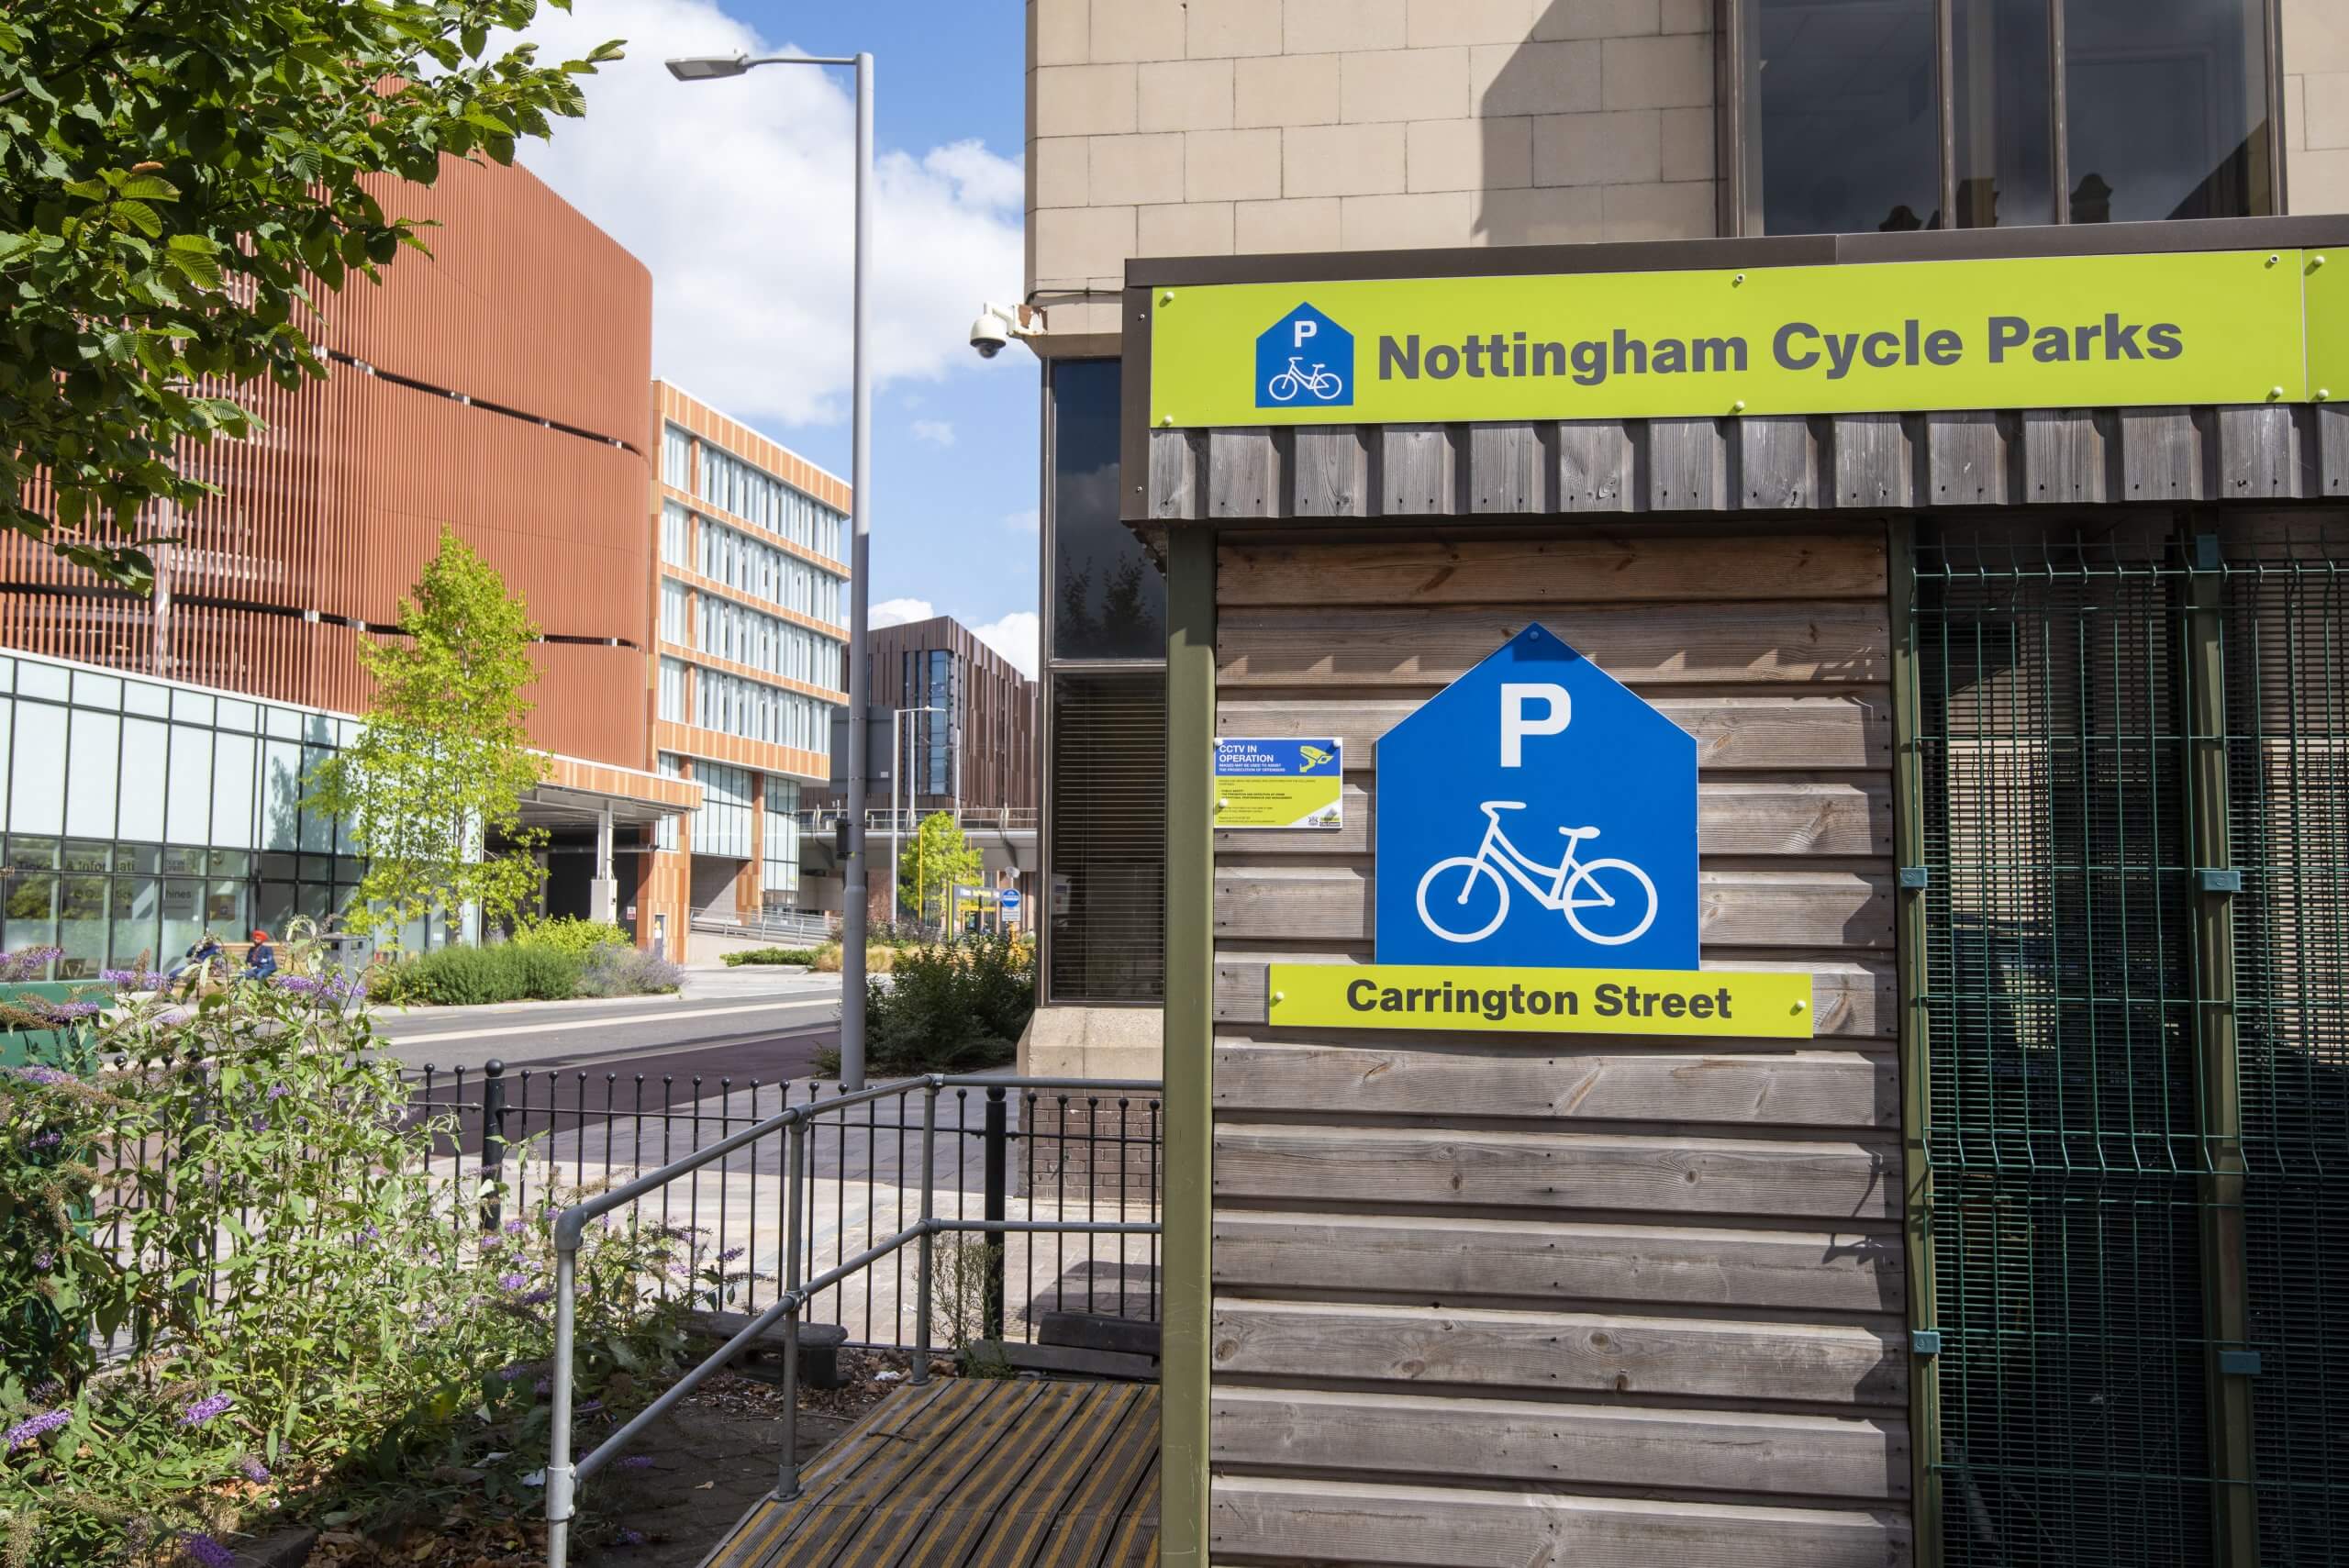 Nottingham Cycle Parks